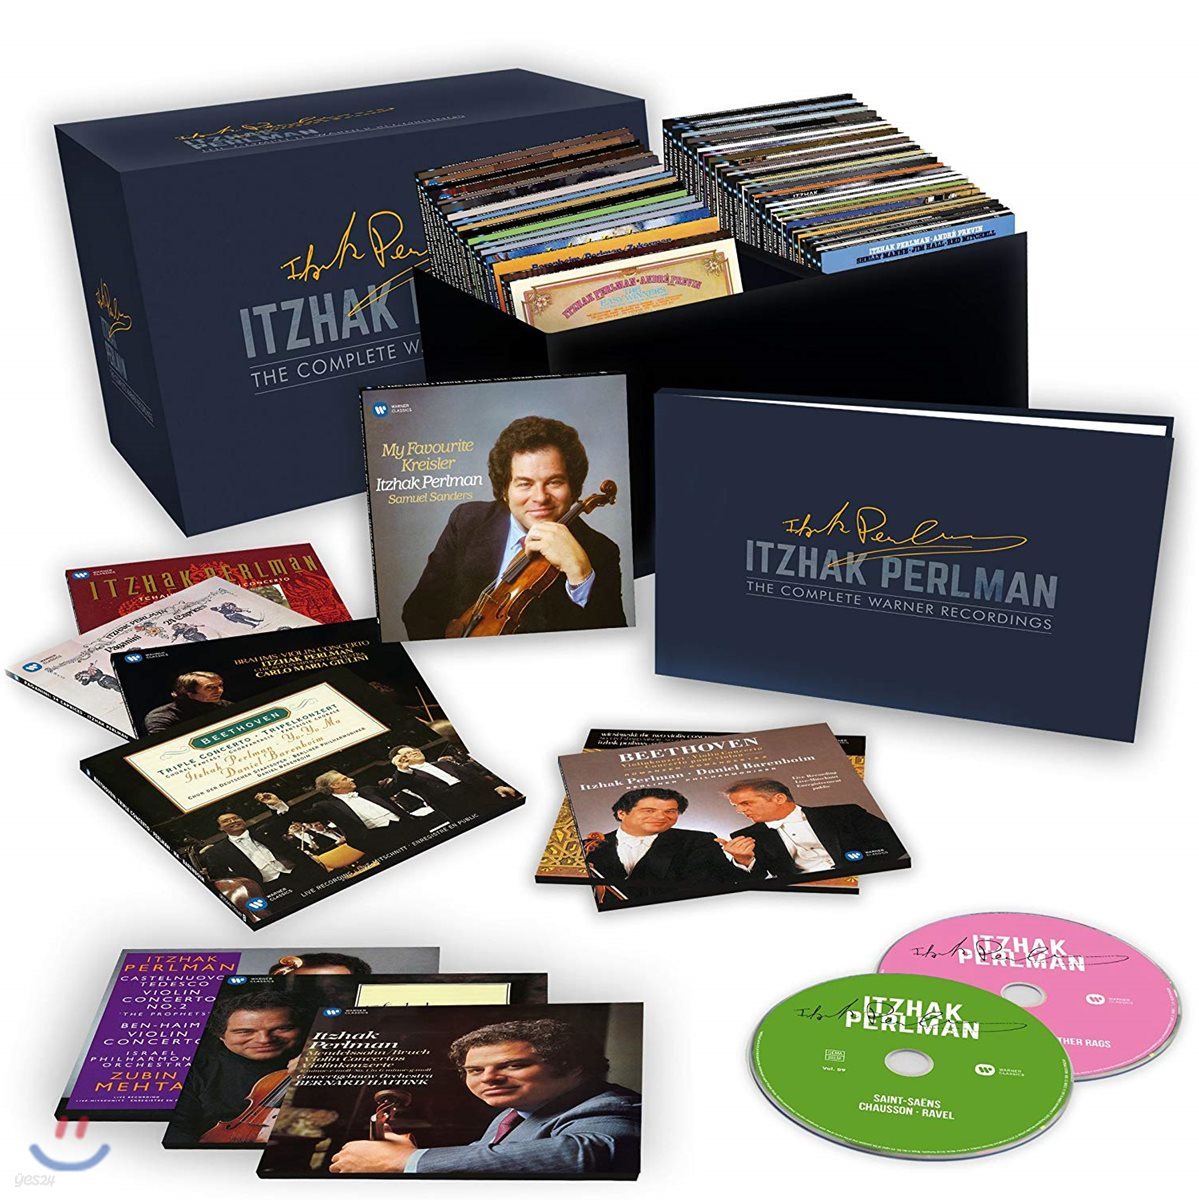 Itzhak Perlman 이차크 펄만 워너 녹음 전곡집 (The Complete Warner Recordings)